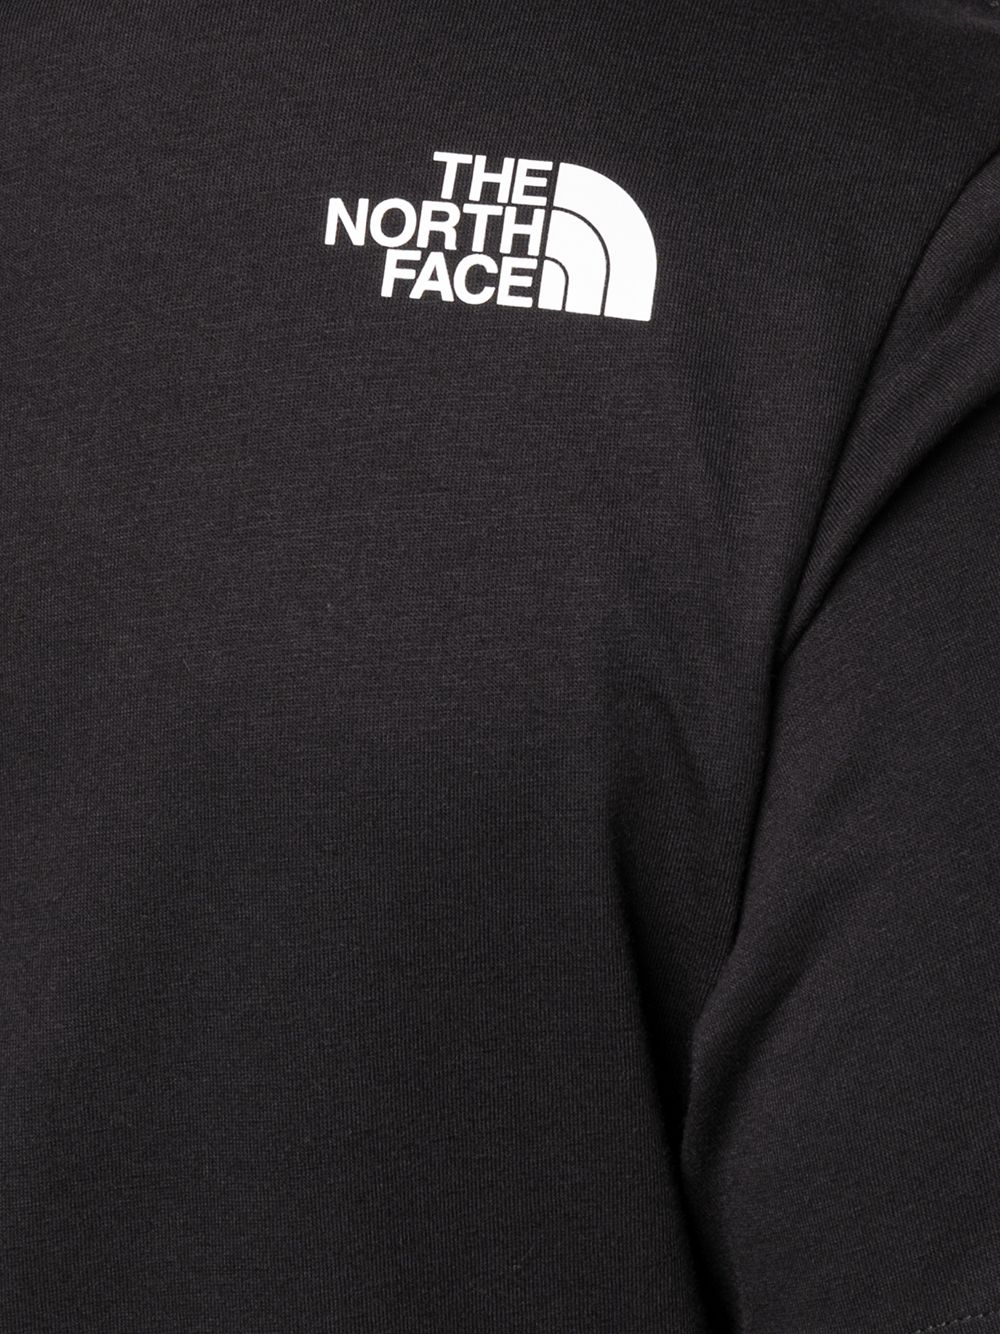 фото The north face футболка с короткими рукавами и нашивкой-логотипом